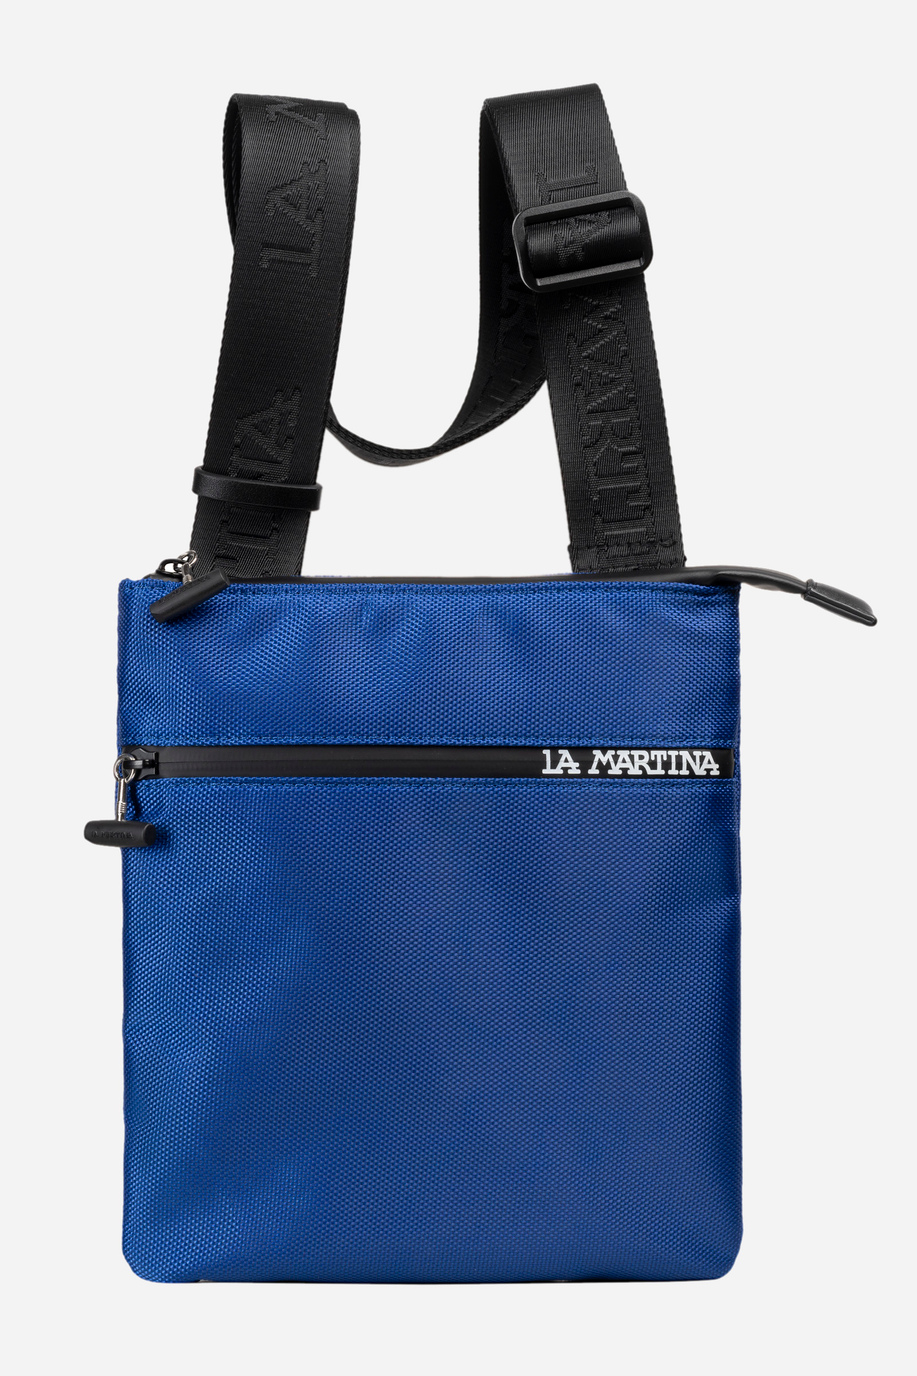 Men's crossbody bag in synthetic material - Daniel - Accessories | La Martina - Official Online Shop